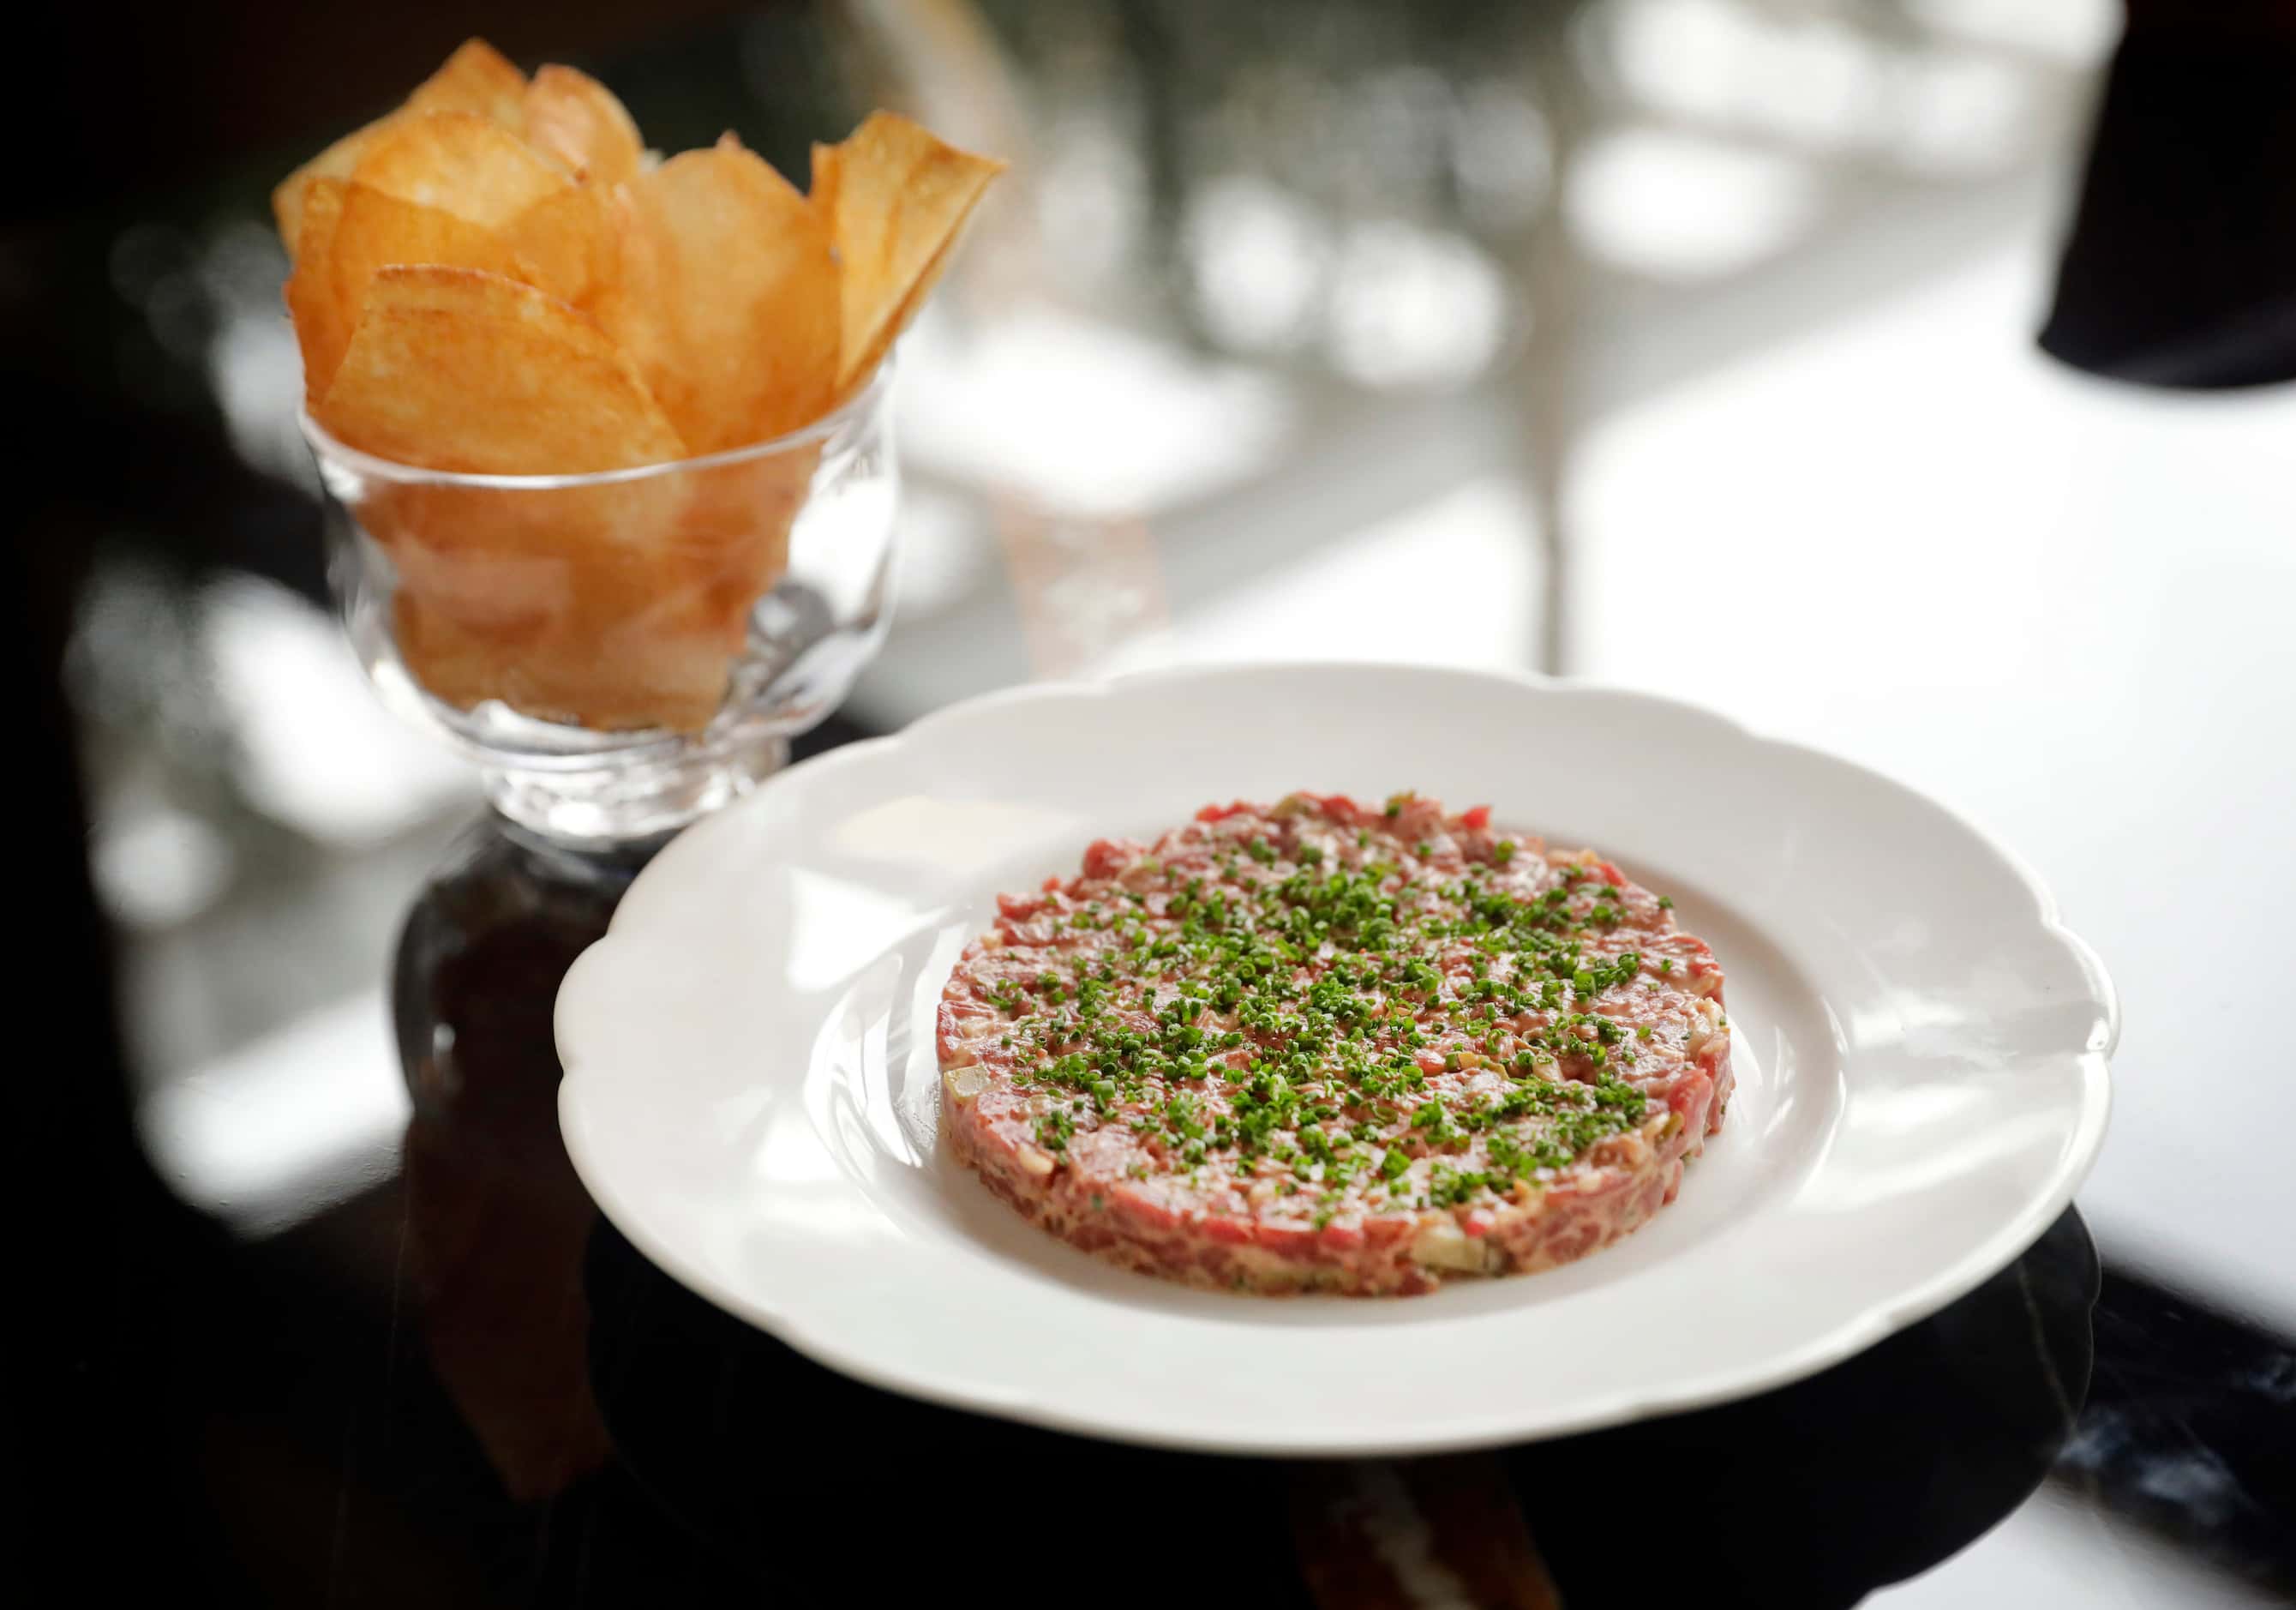 Steak tartare will be served at Bar Colette in Dallas' West Village.